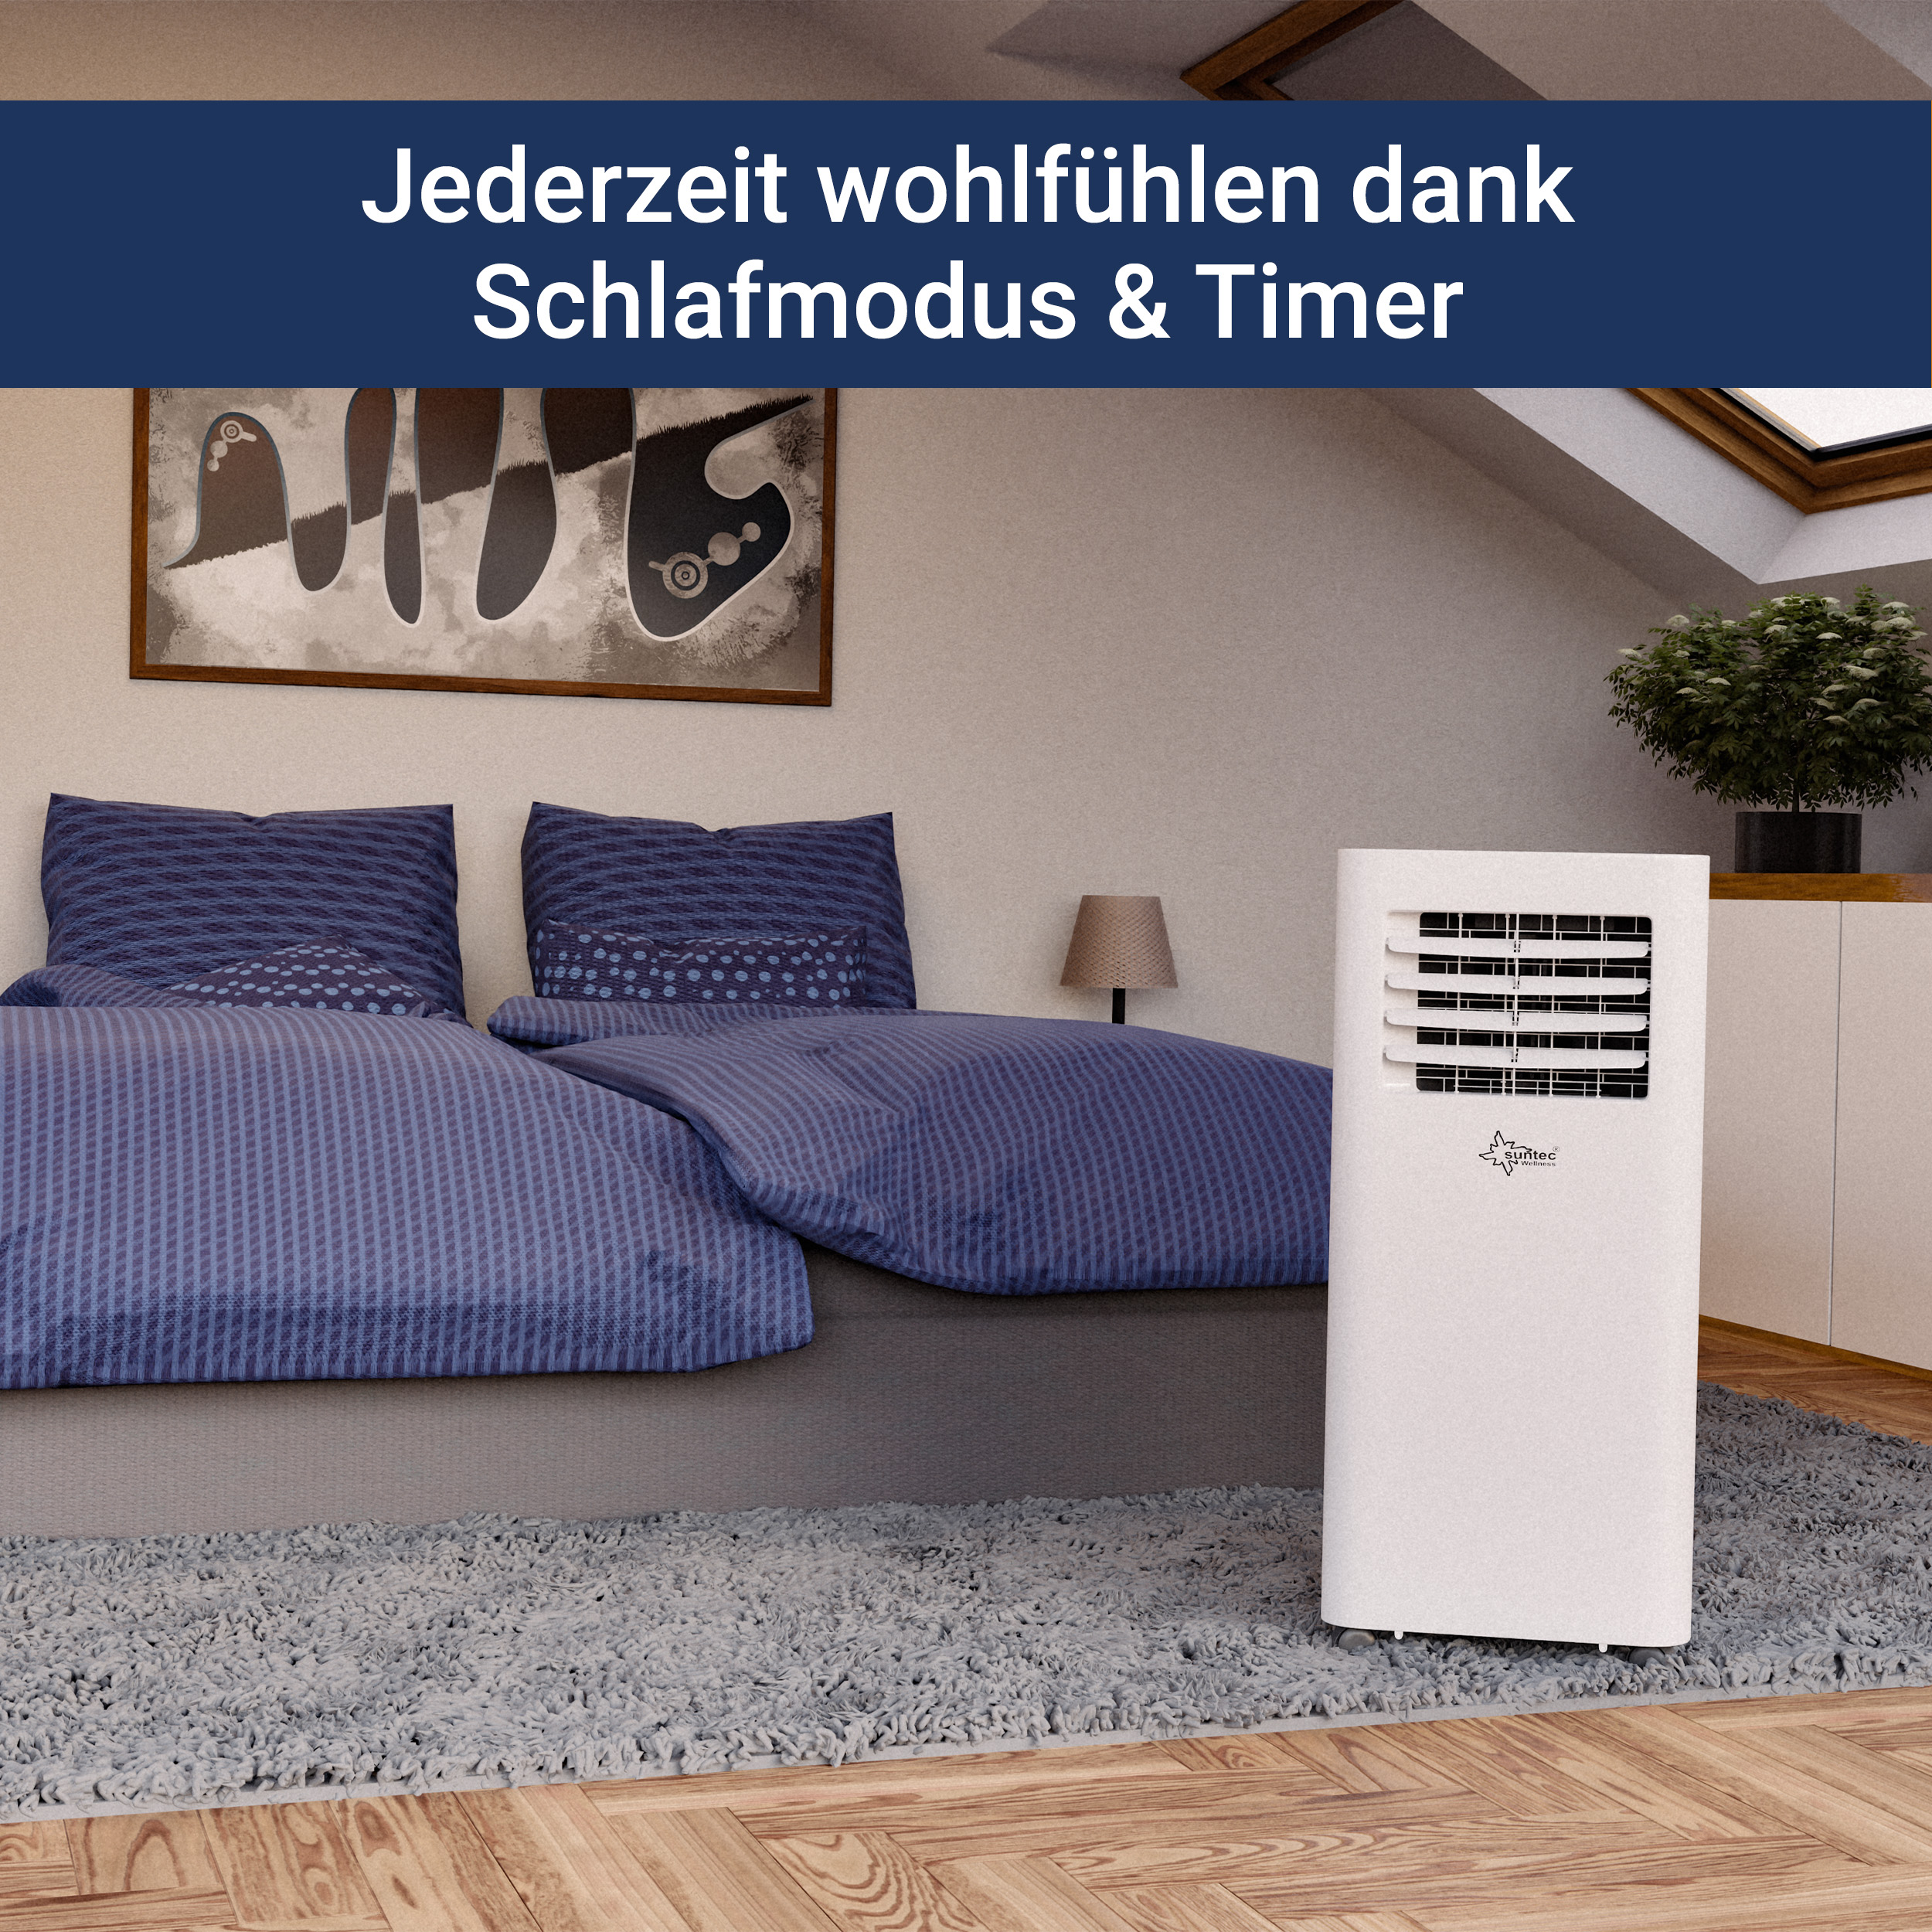 SUNTEC Coolmaster 2.0 Eco Weiß Klimagerät 25 A) R290 EEK: Raumgröße: (Max. m²